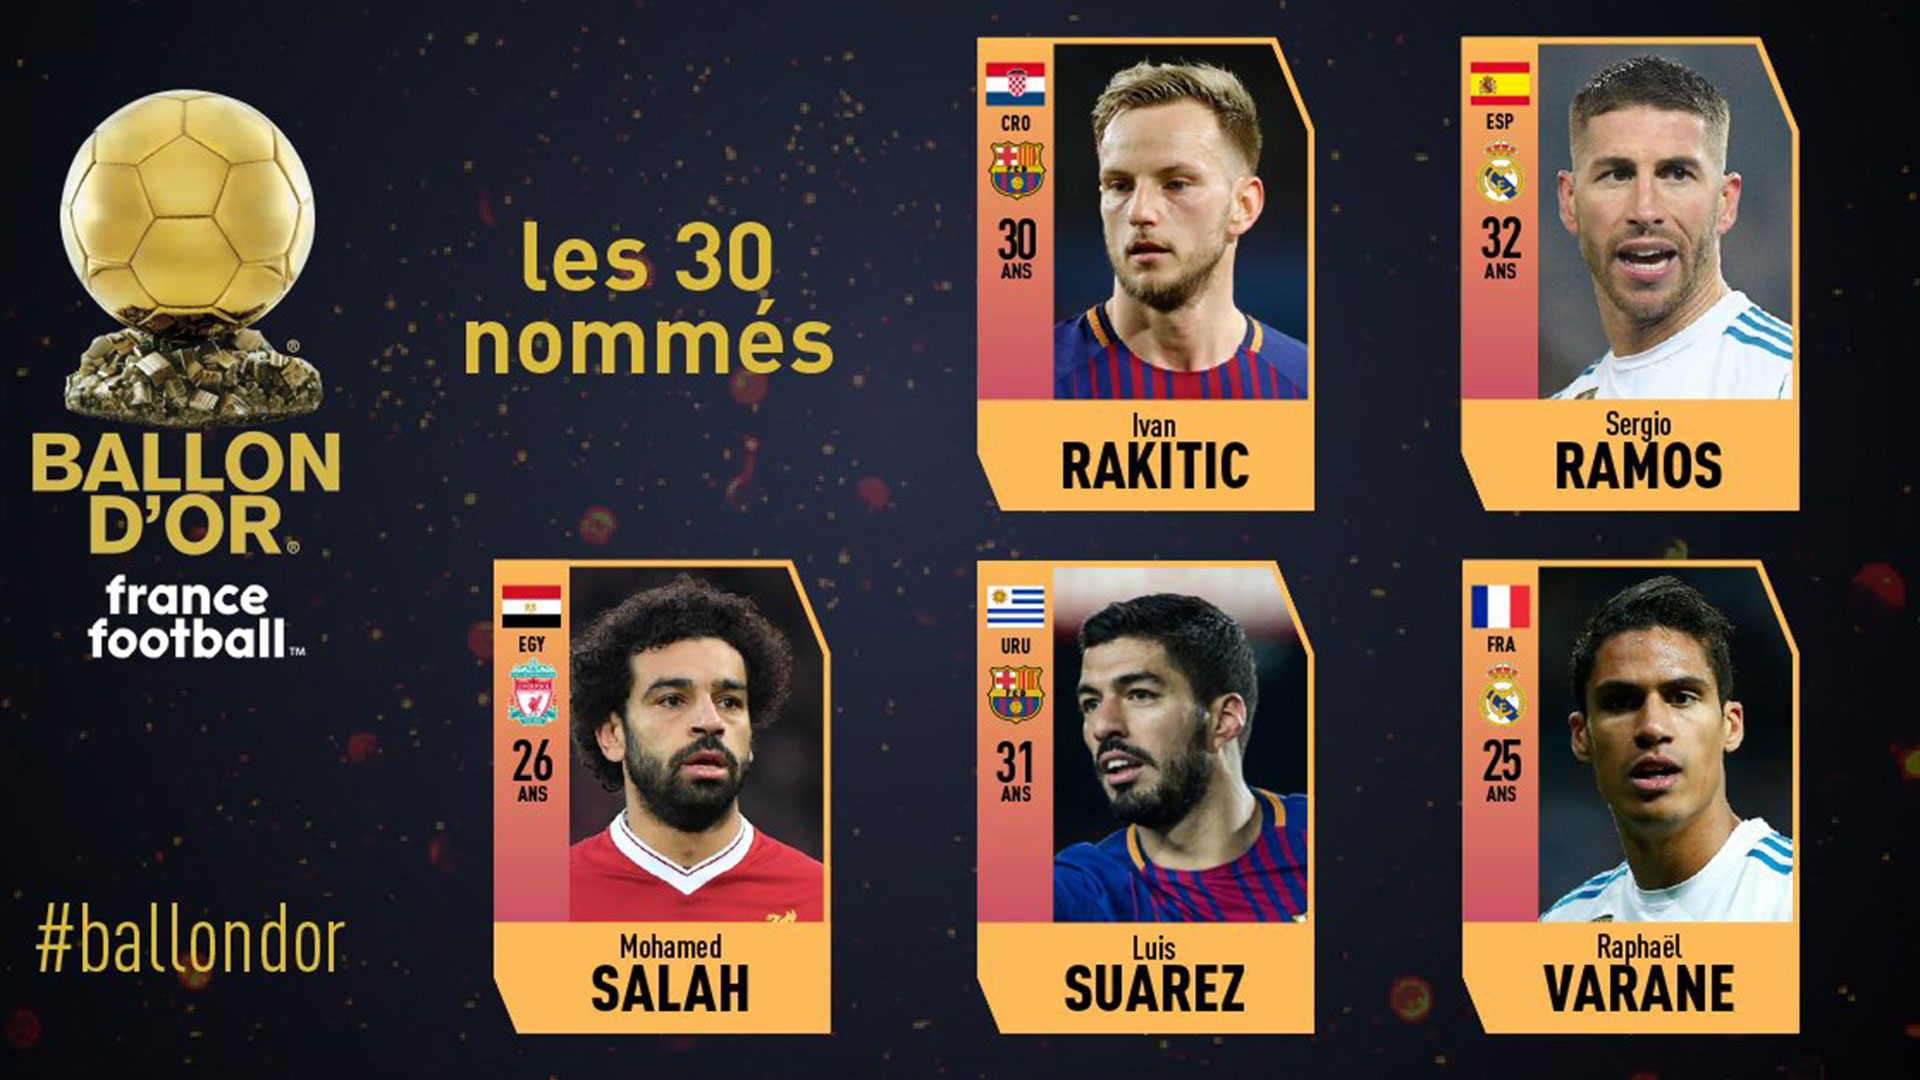 Ivan Rakitc, Sergio Ramos, Mohamed Salah, Luis Suárez y Raphael Barane